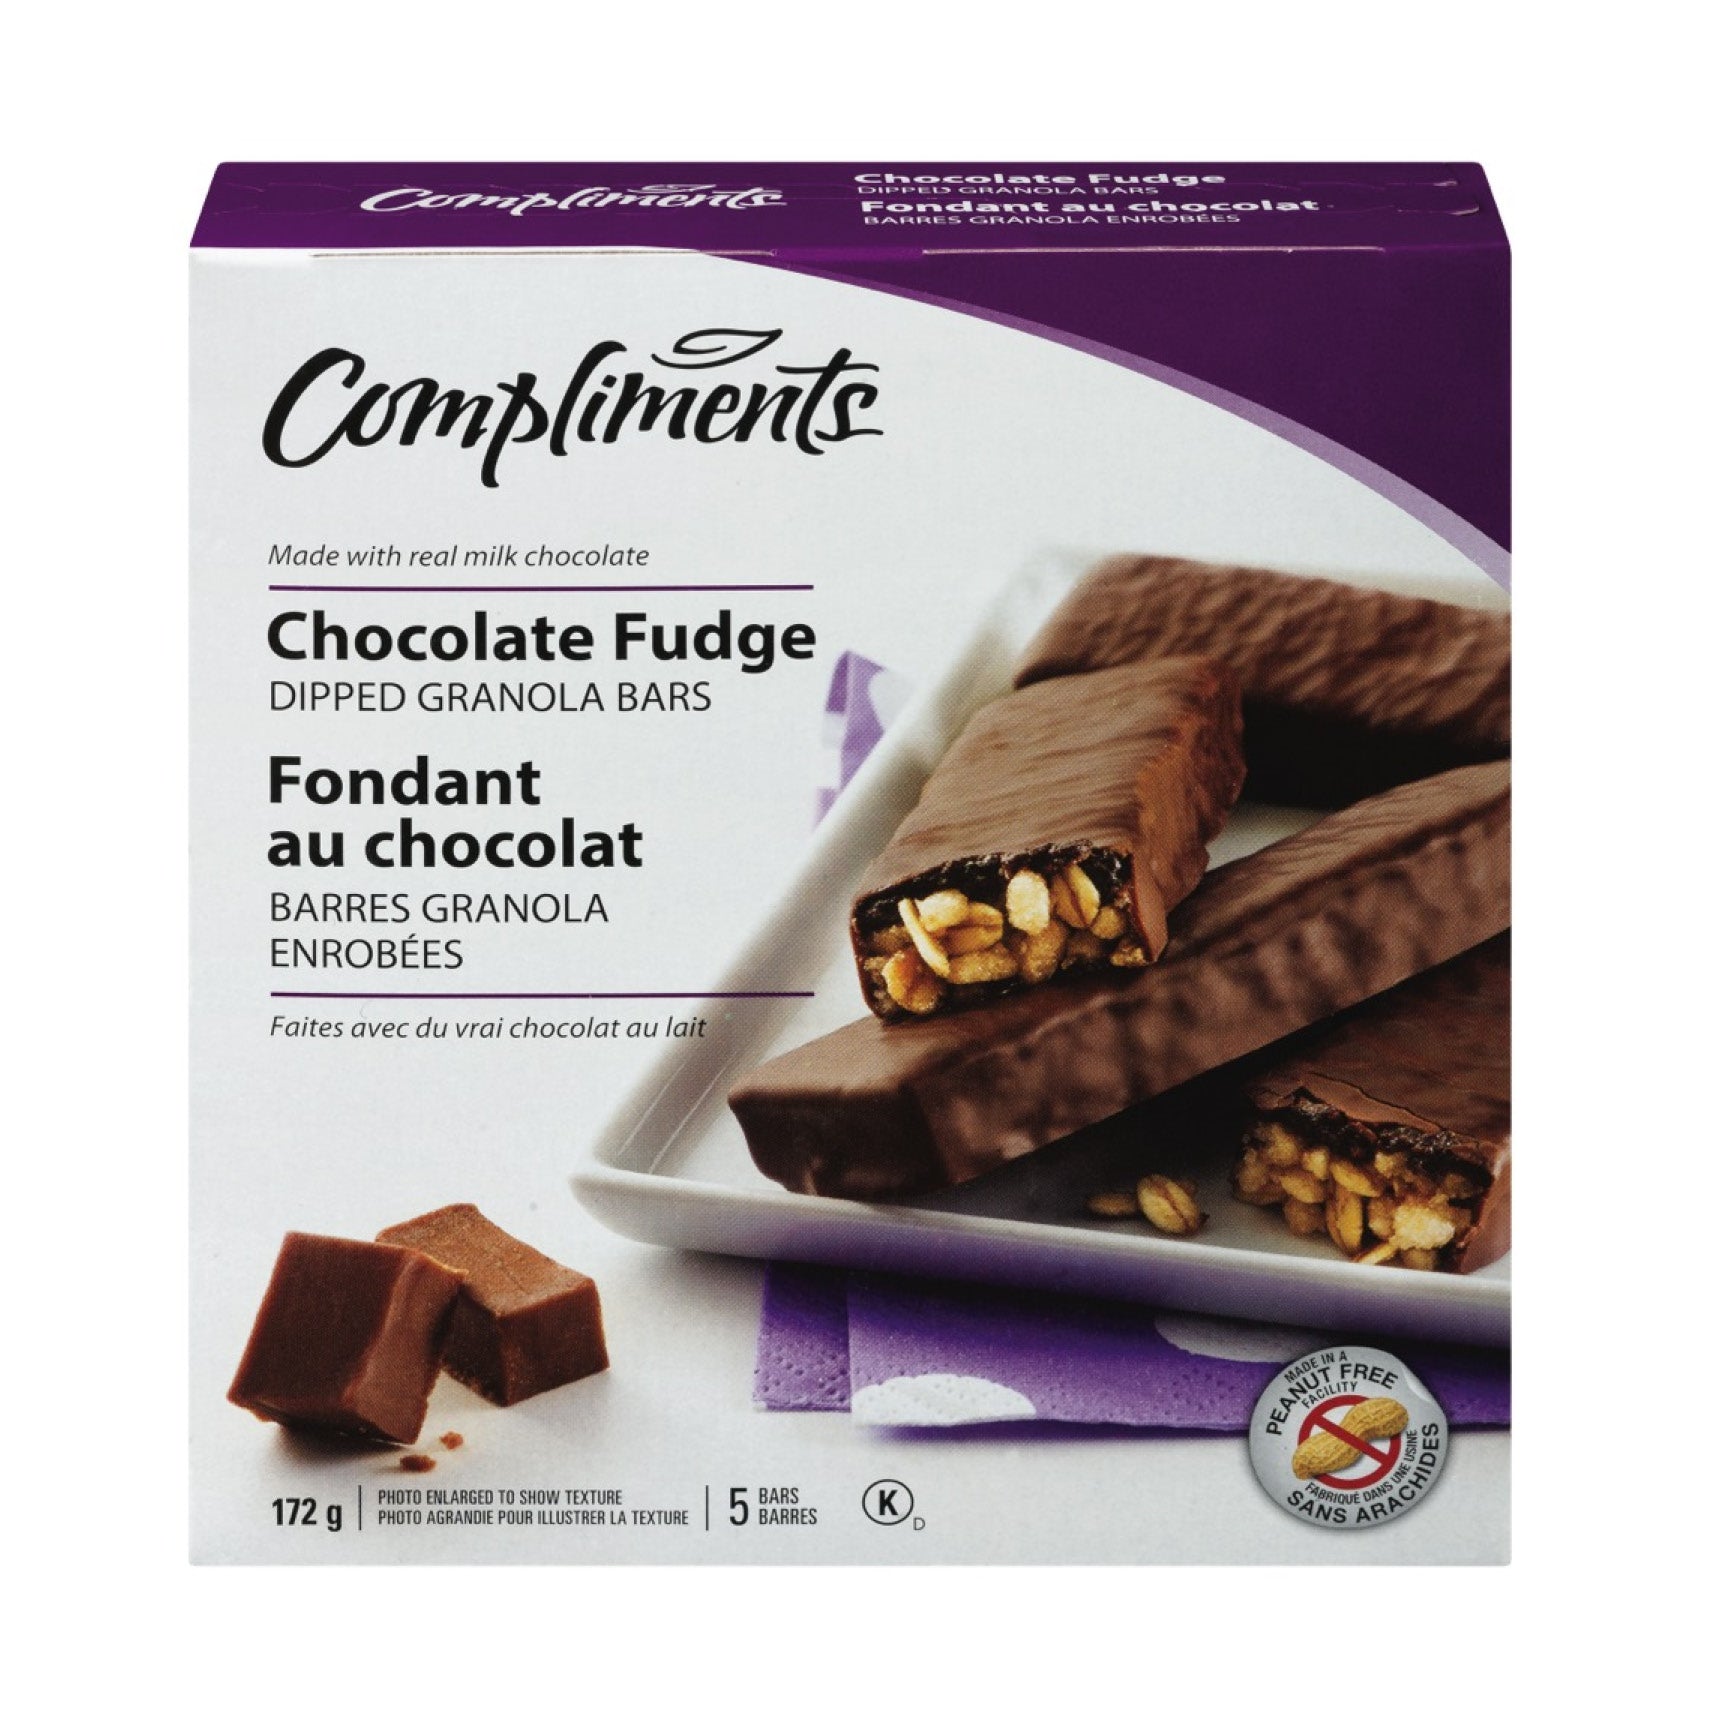 Compliments Dipped Chocolate Fudge Granola Bars,5pk, 172g